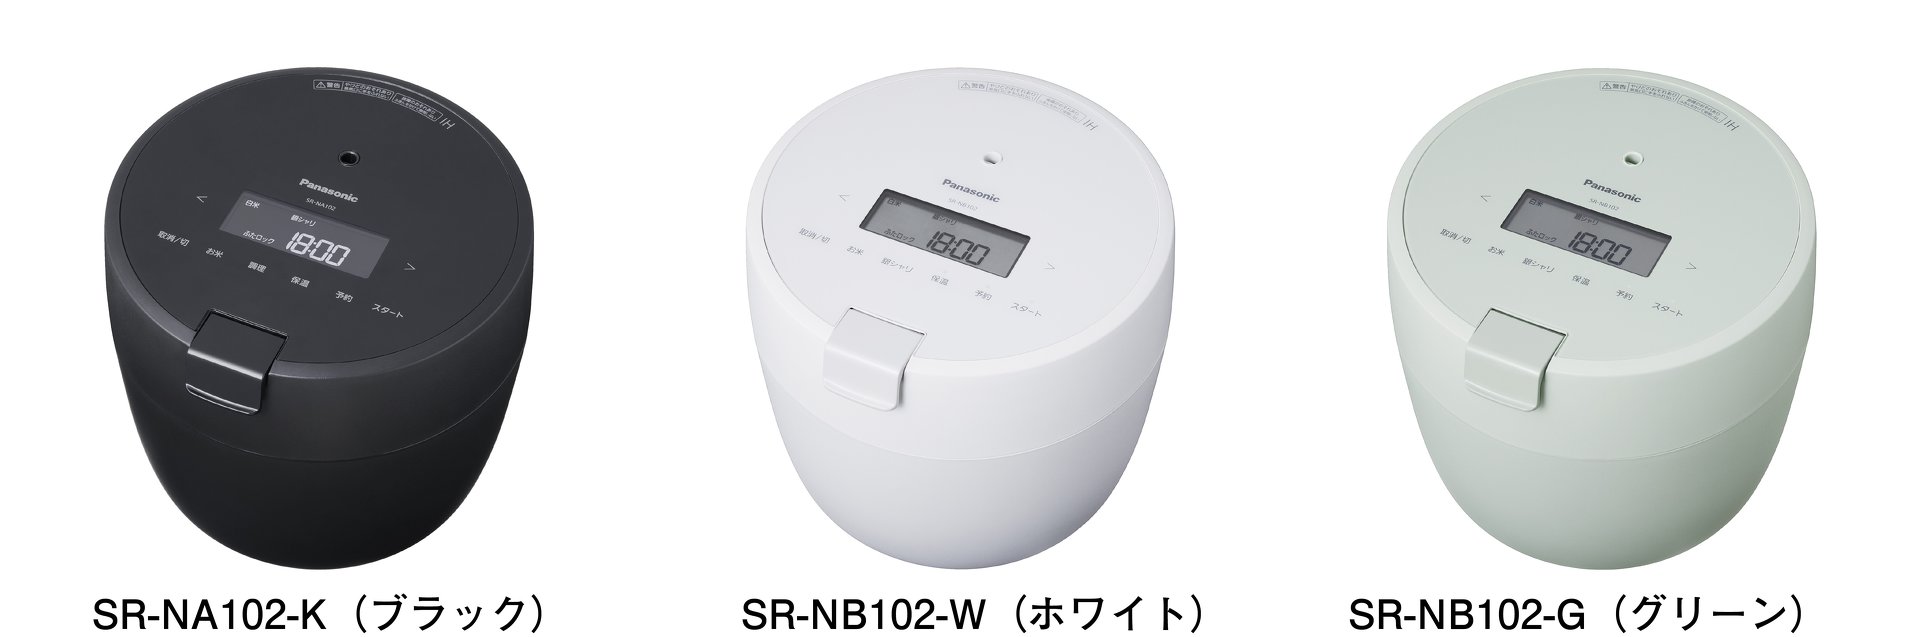 【新品・未開封】圧力IHジャー炊飯器 SRNB102G